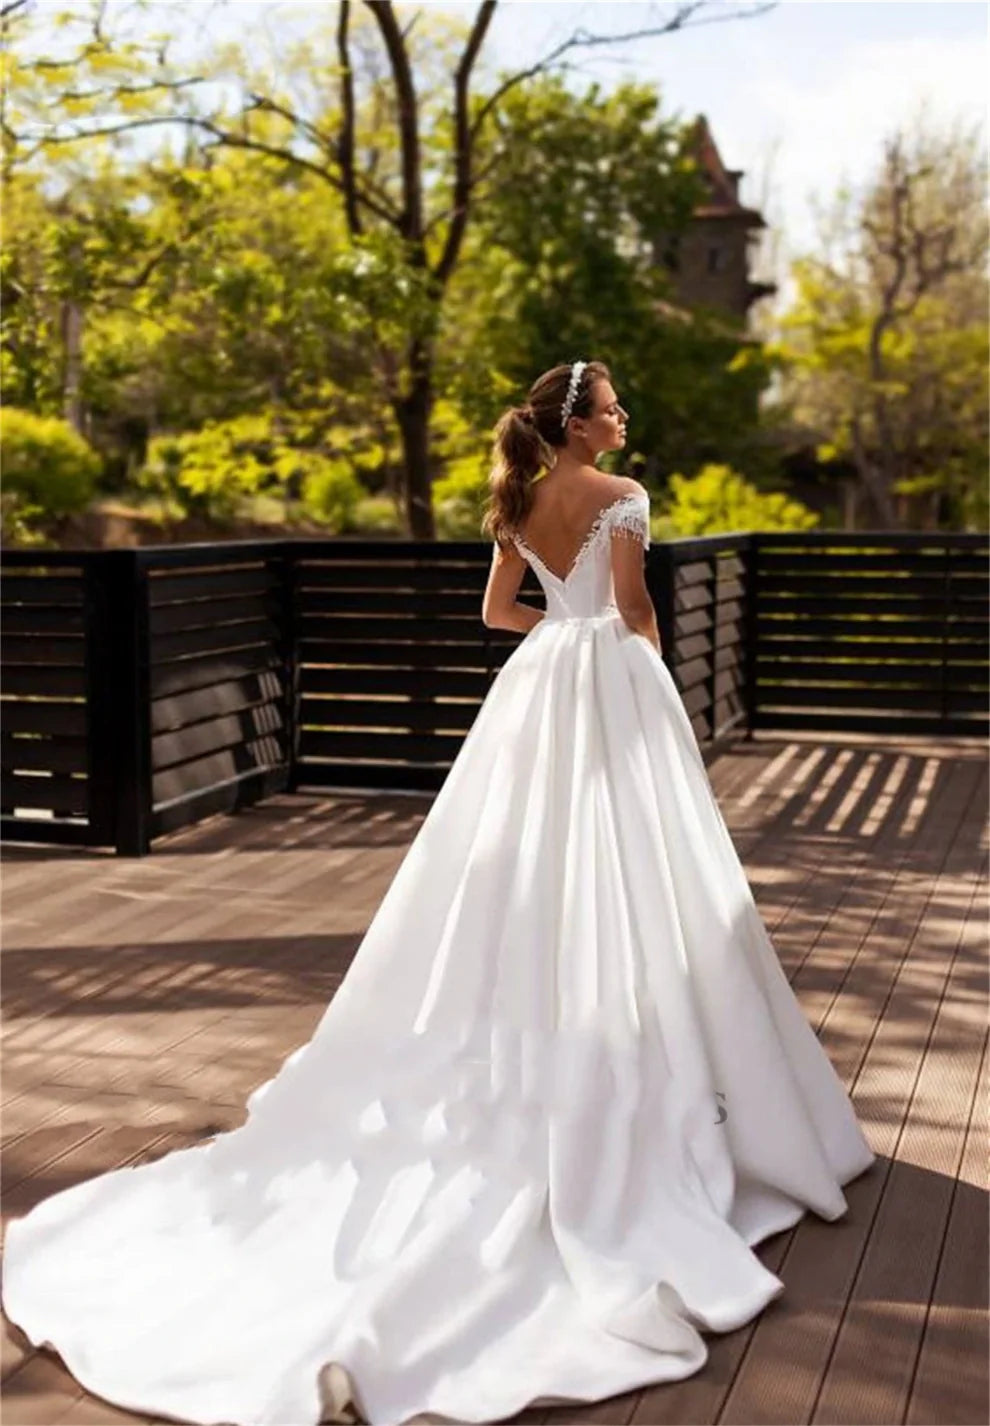 Gaun pengantin putri barisan manik -manik lace appliques pengantin gaun ilusi gaun pesta belakang kereta api gaun pengantin